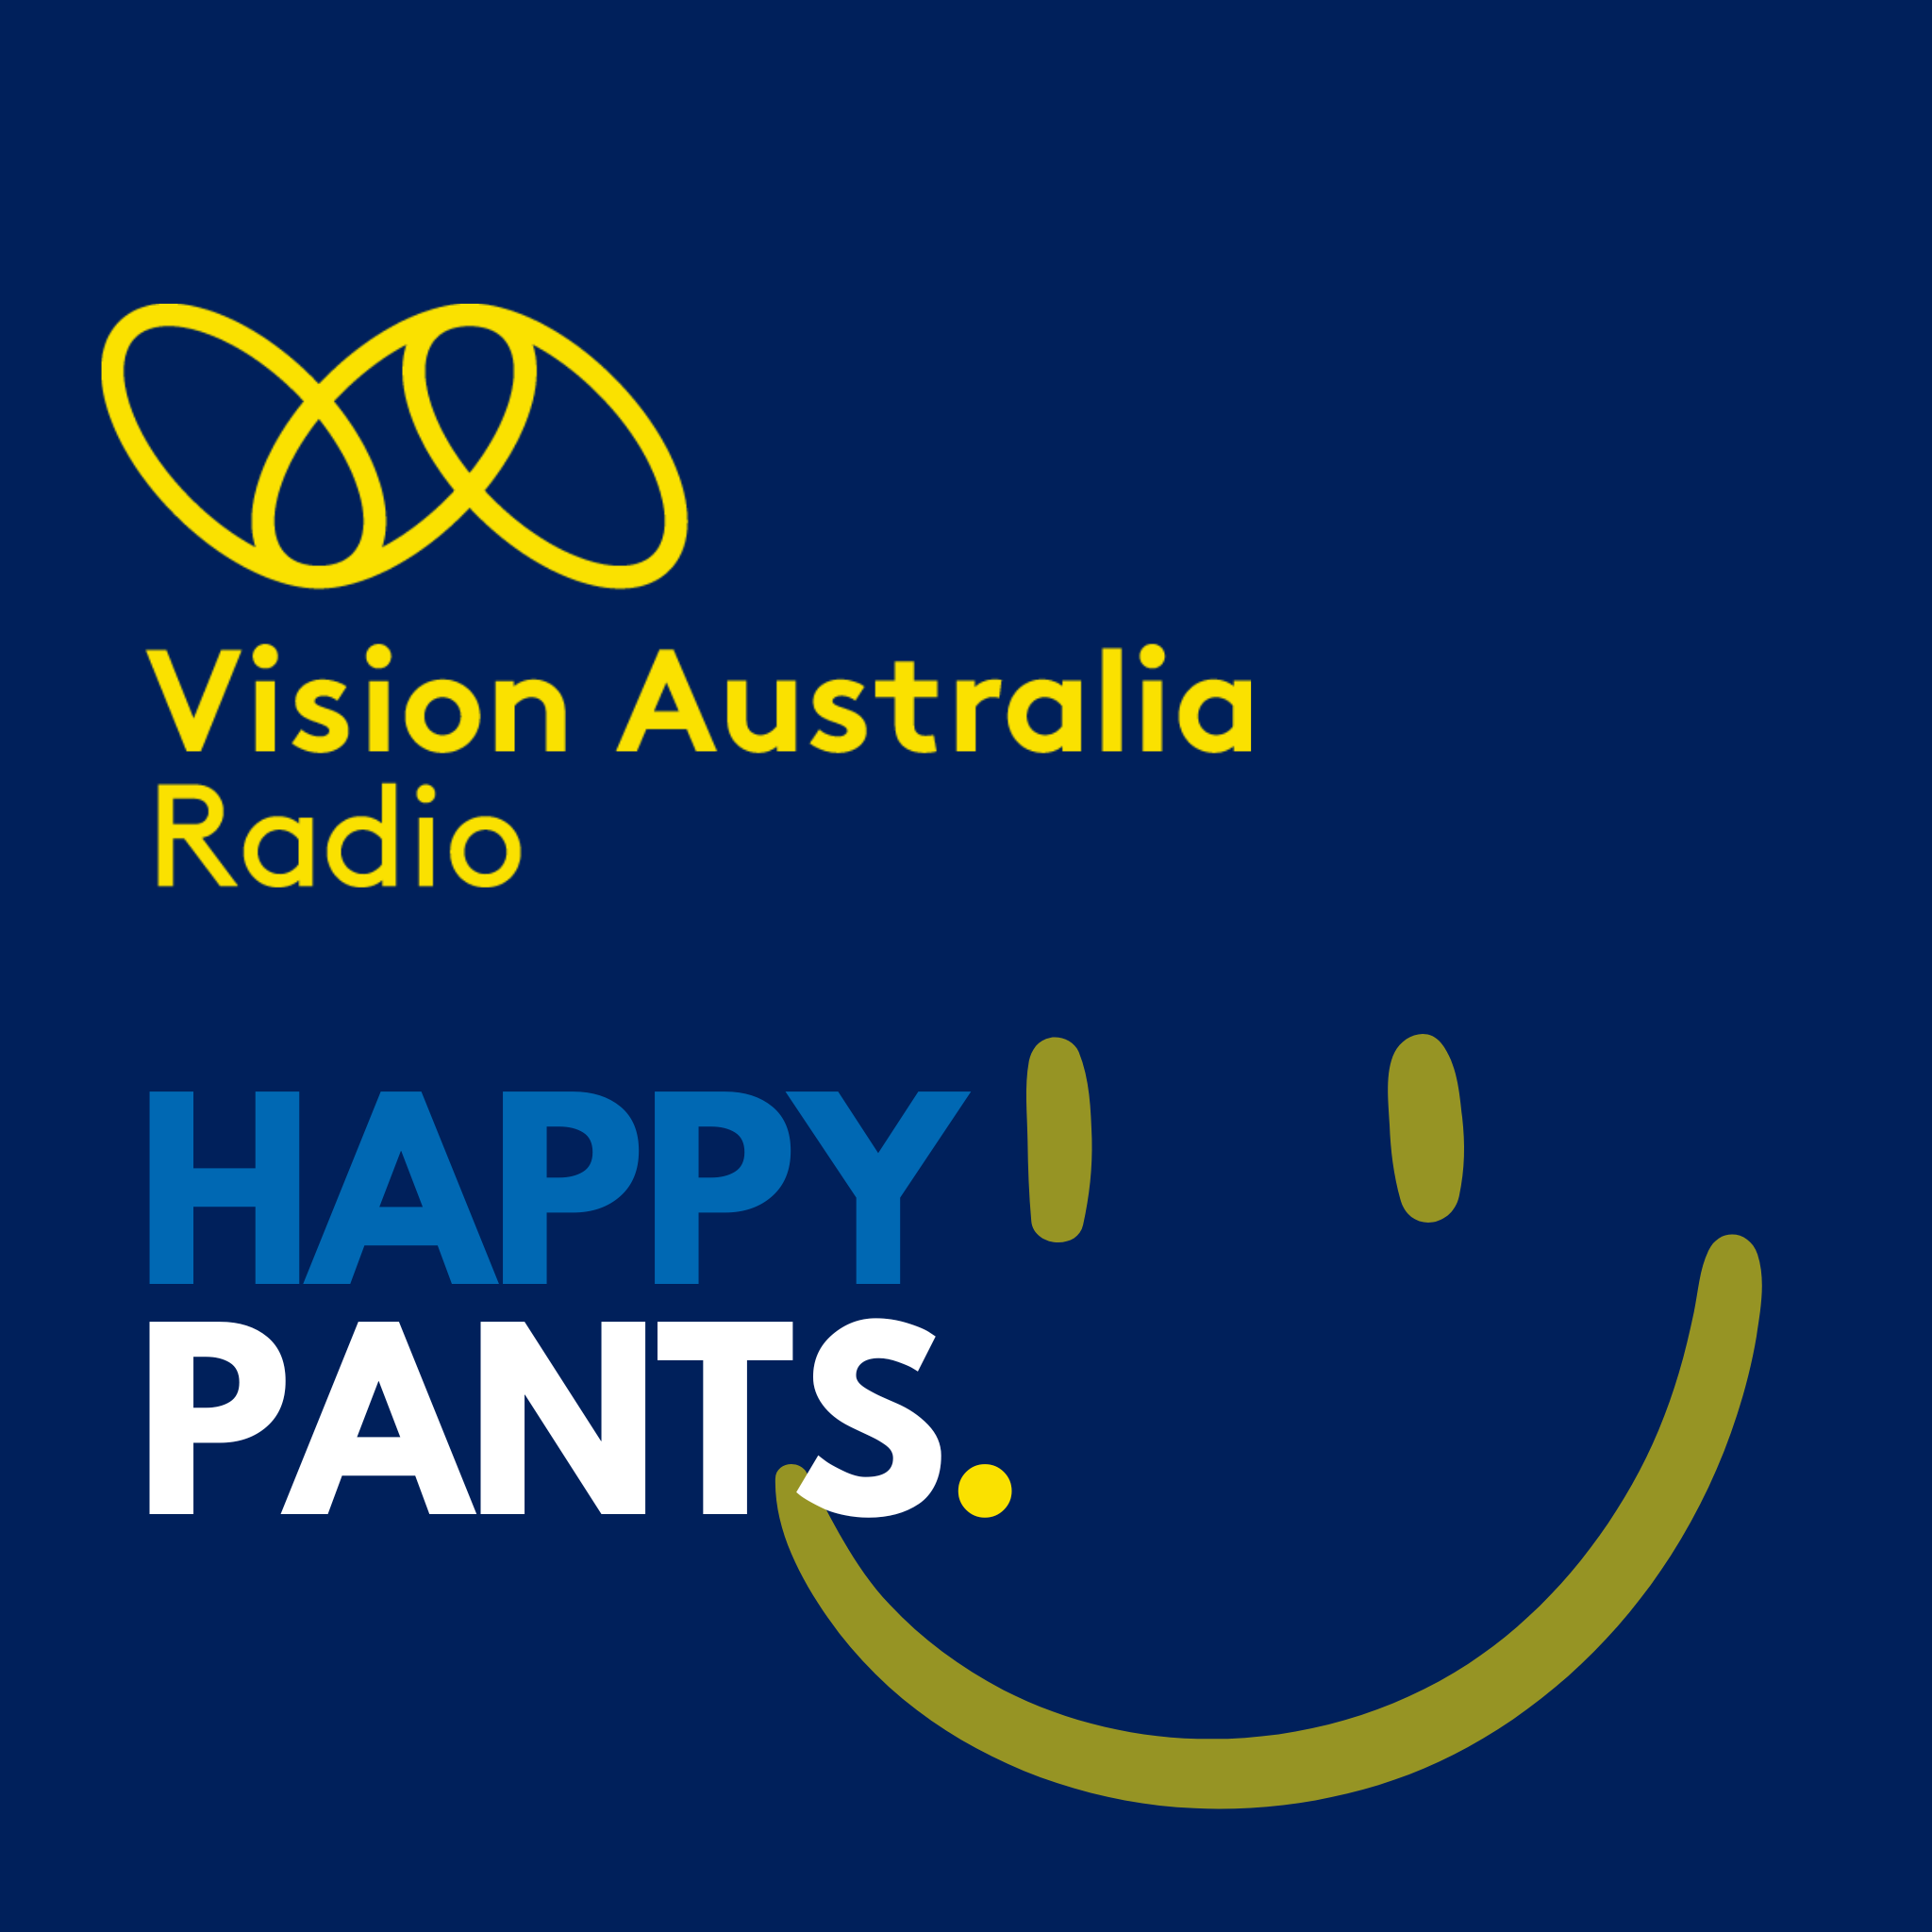 Happy Pants - December 23